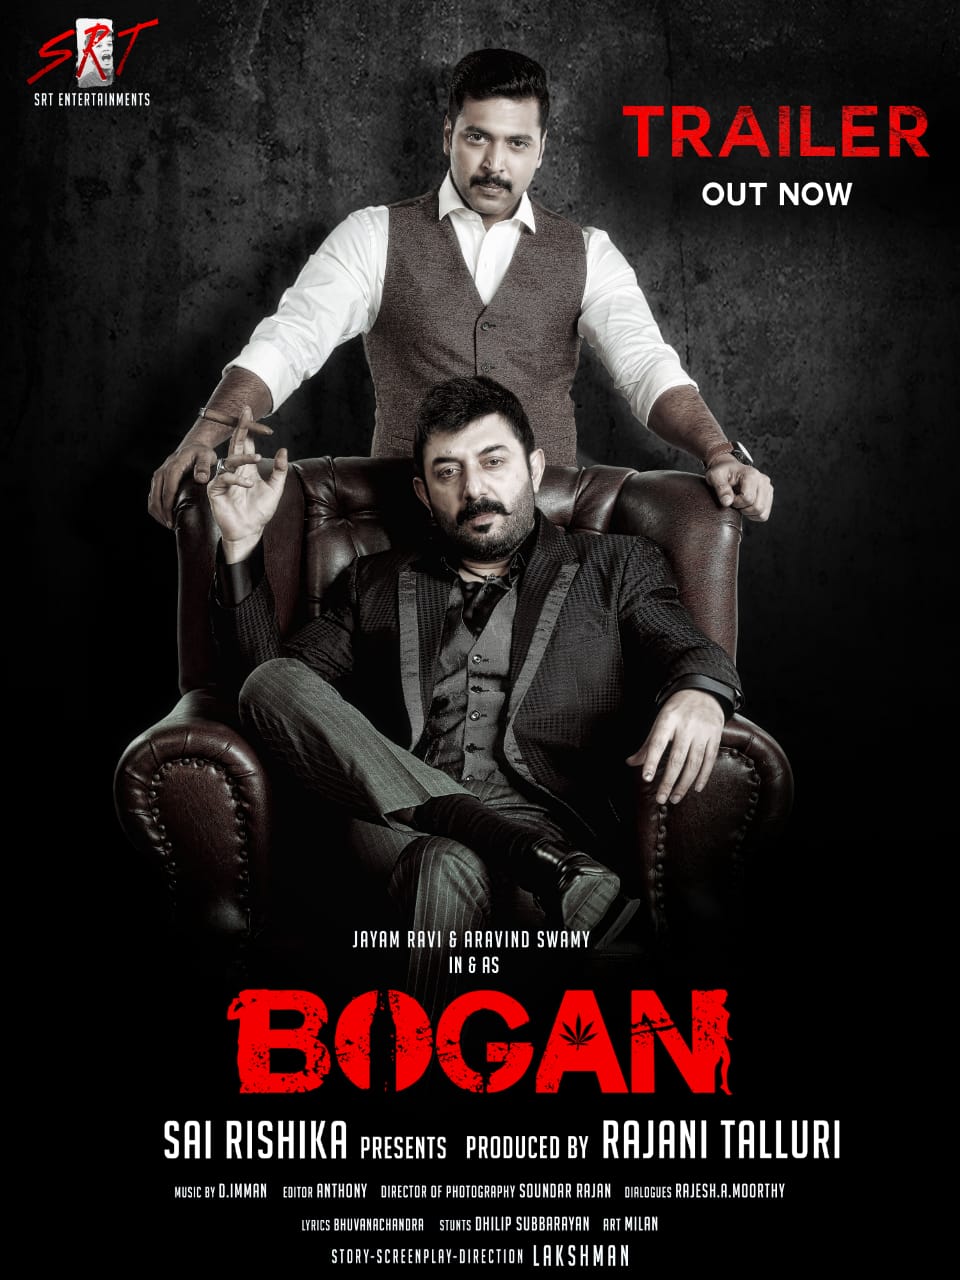 Aravind Swamy and Jayam Ravi’s Bogan Telugu Trailer out now